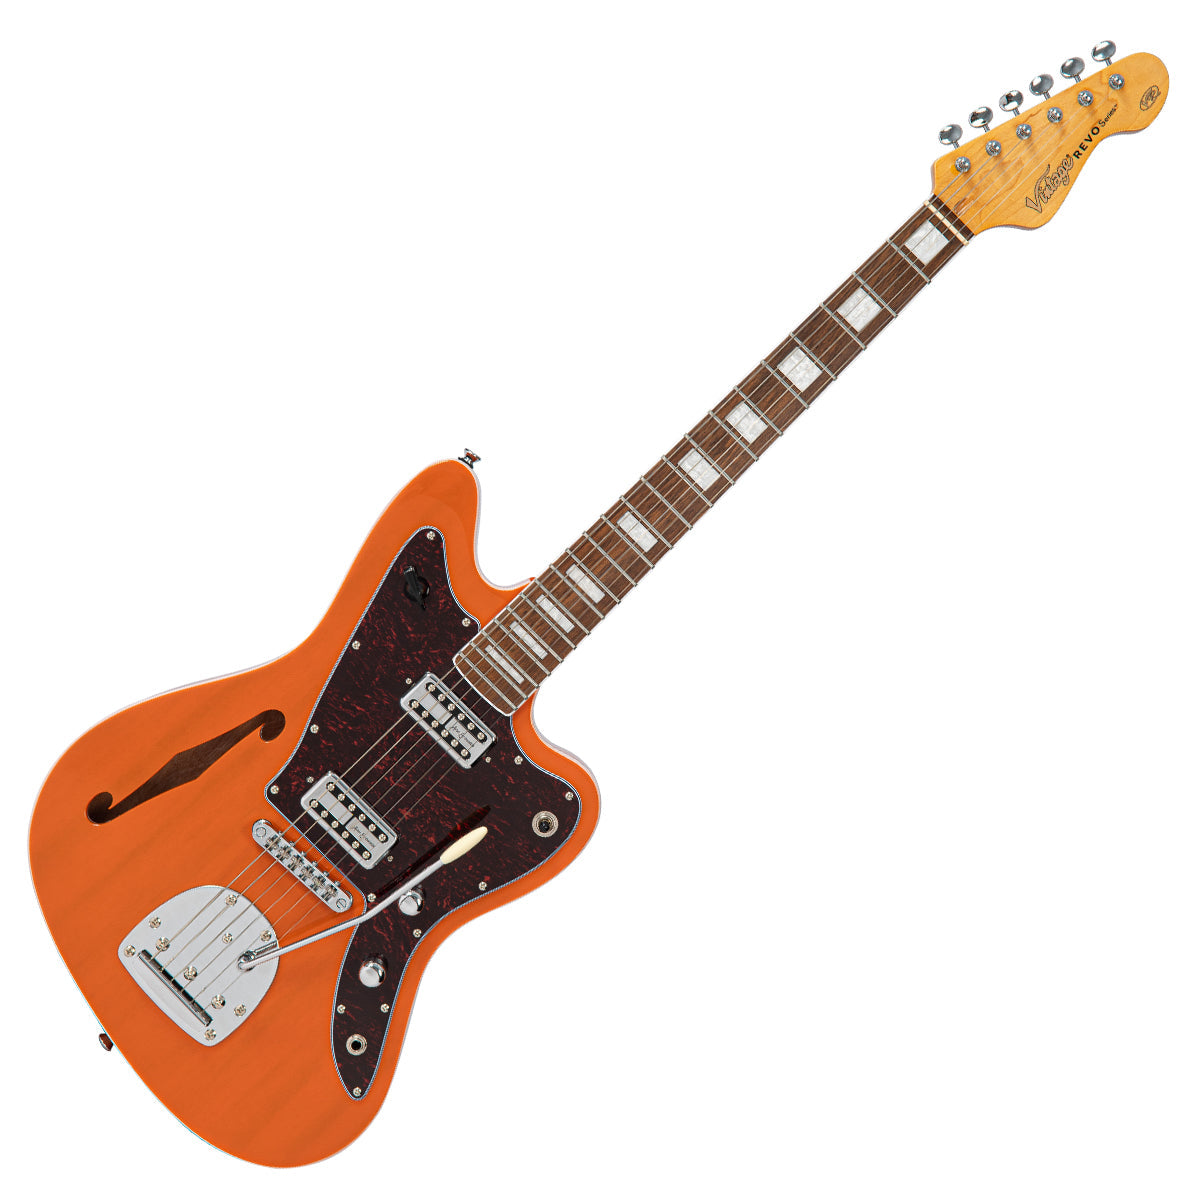 Vintage REVO Series 'Surfmaster' Thinline Twin Electric Guitar ~ Trans Orange, Electric Guitars for sale at Richards Guitars.